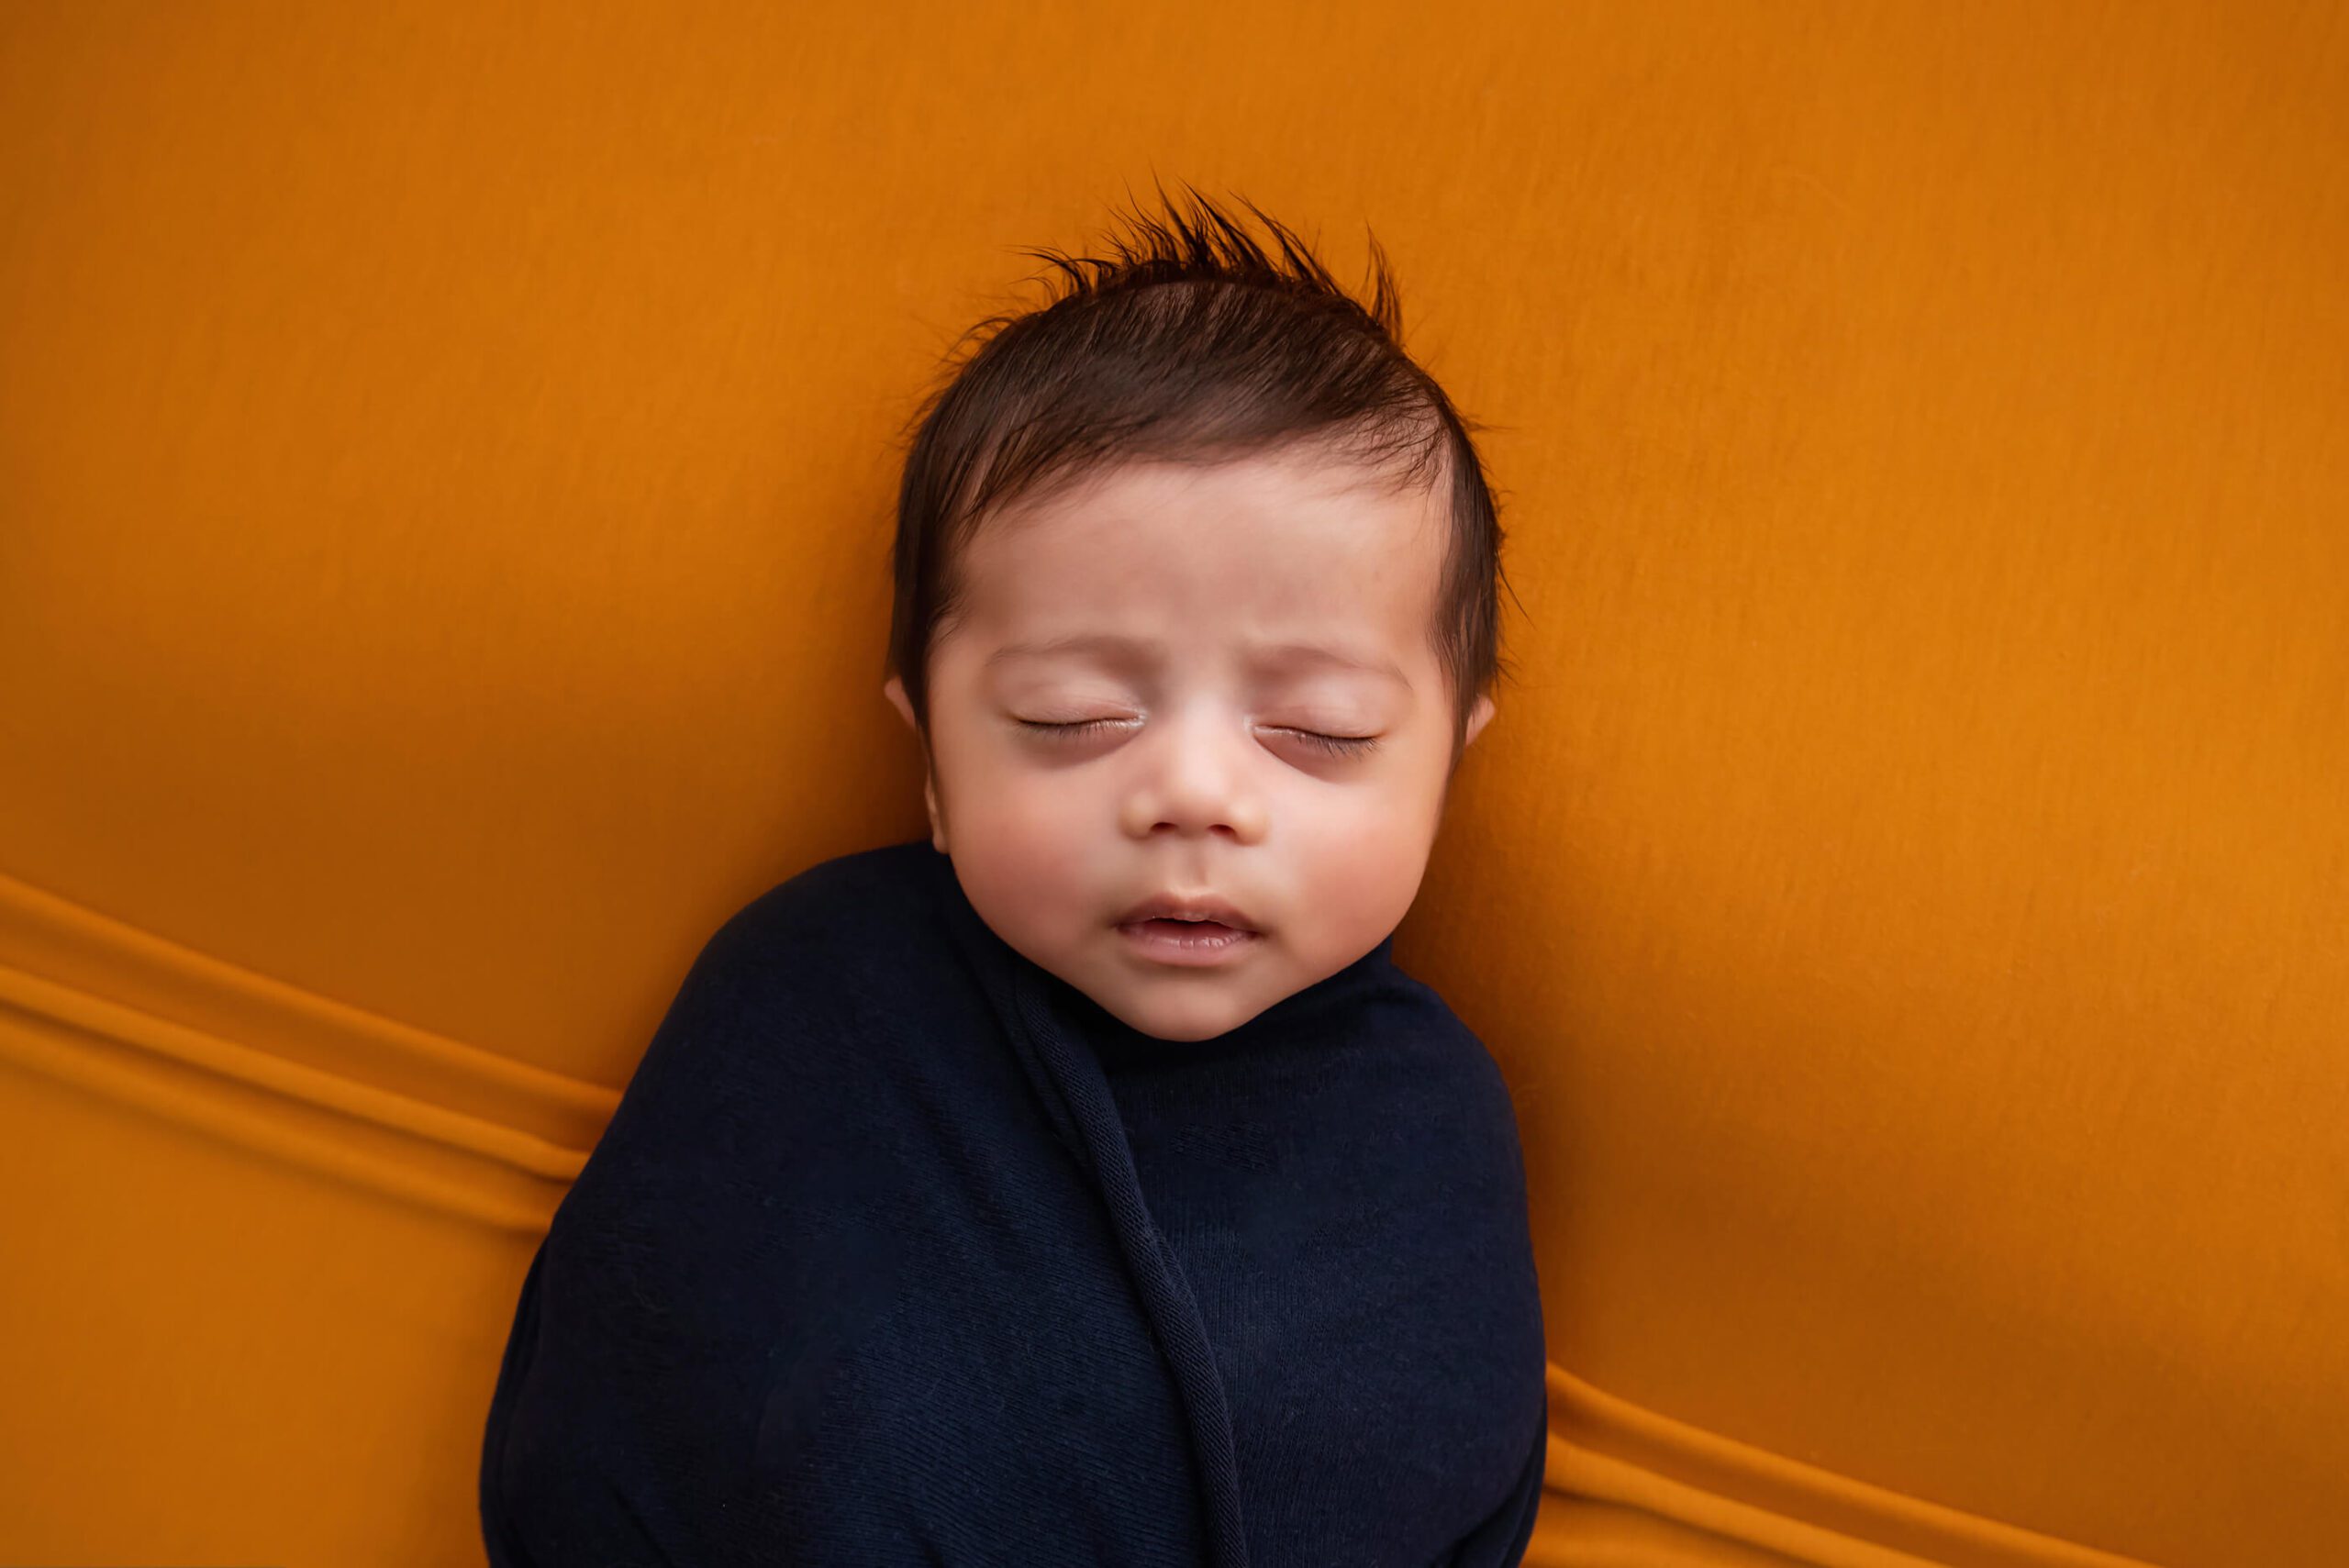 newborn boy wrapped in blue on orange blanket